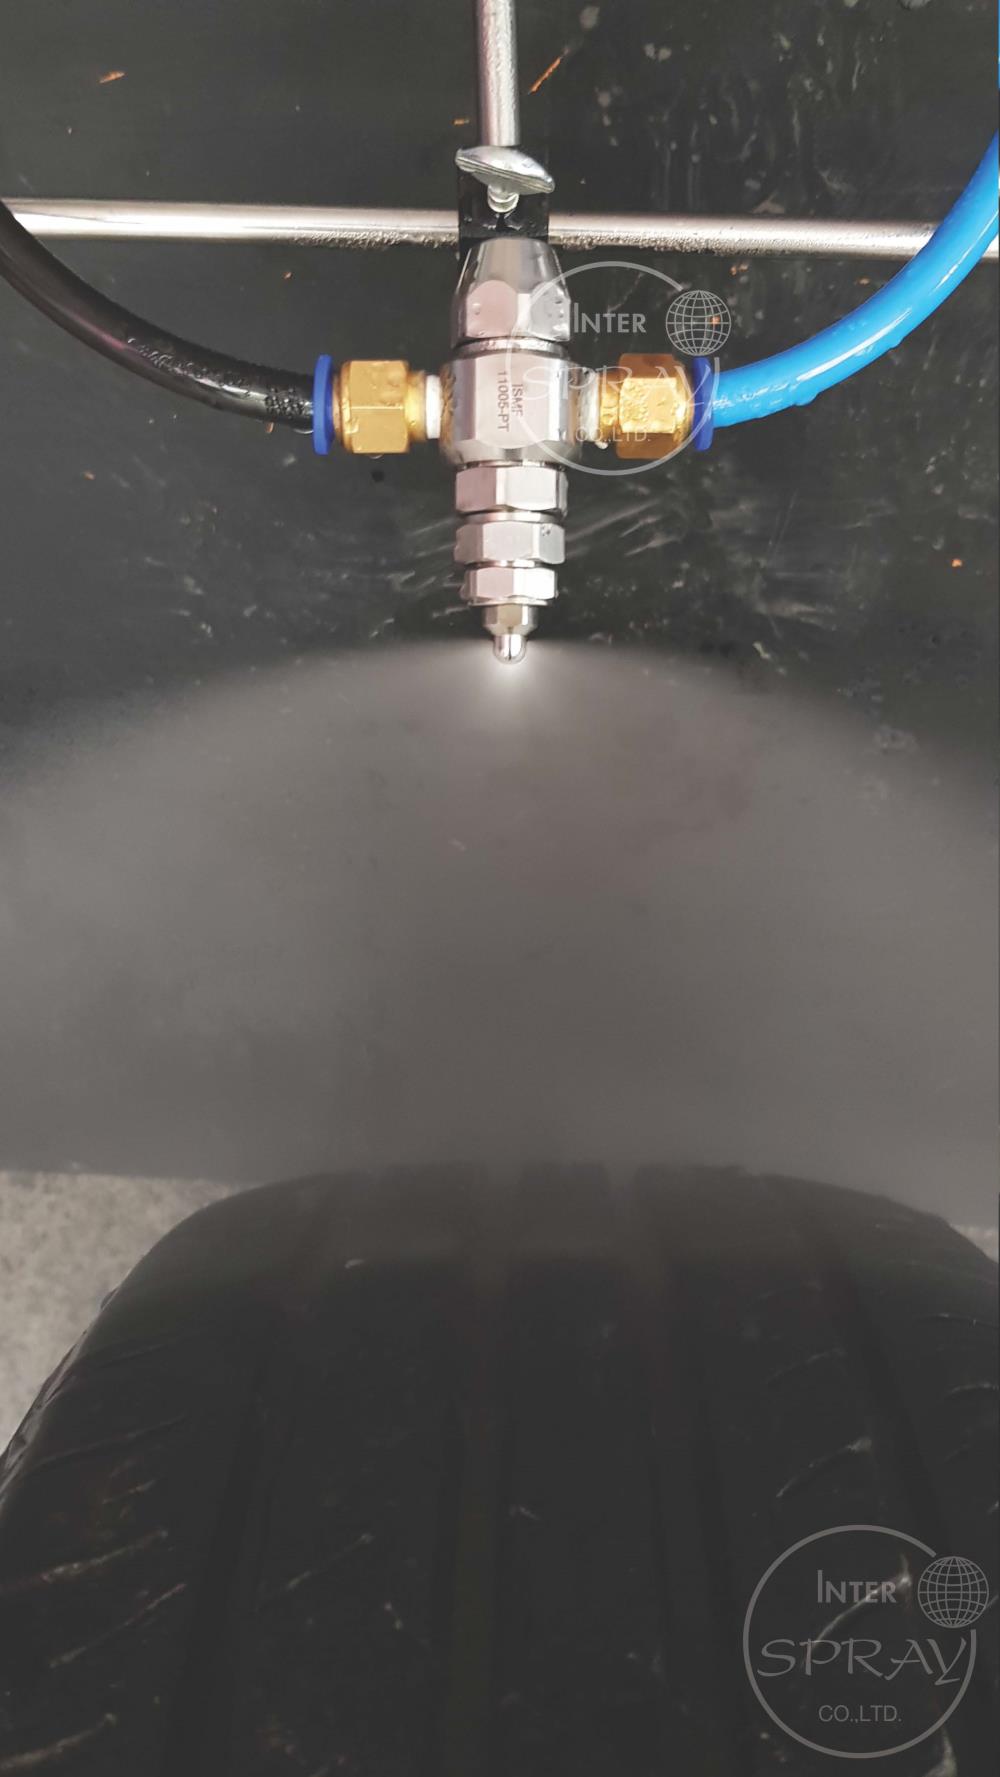 Spray Nozzle Design